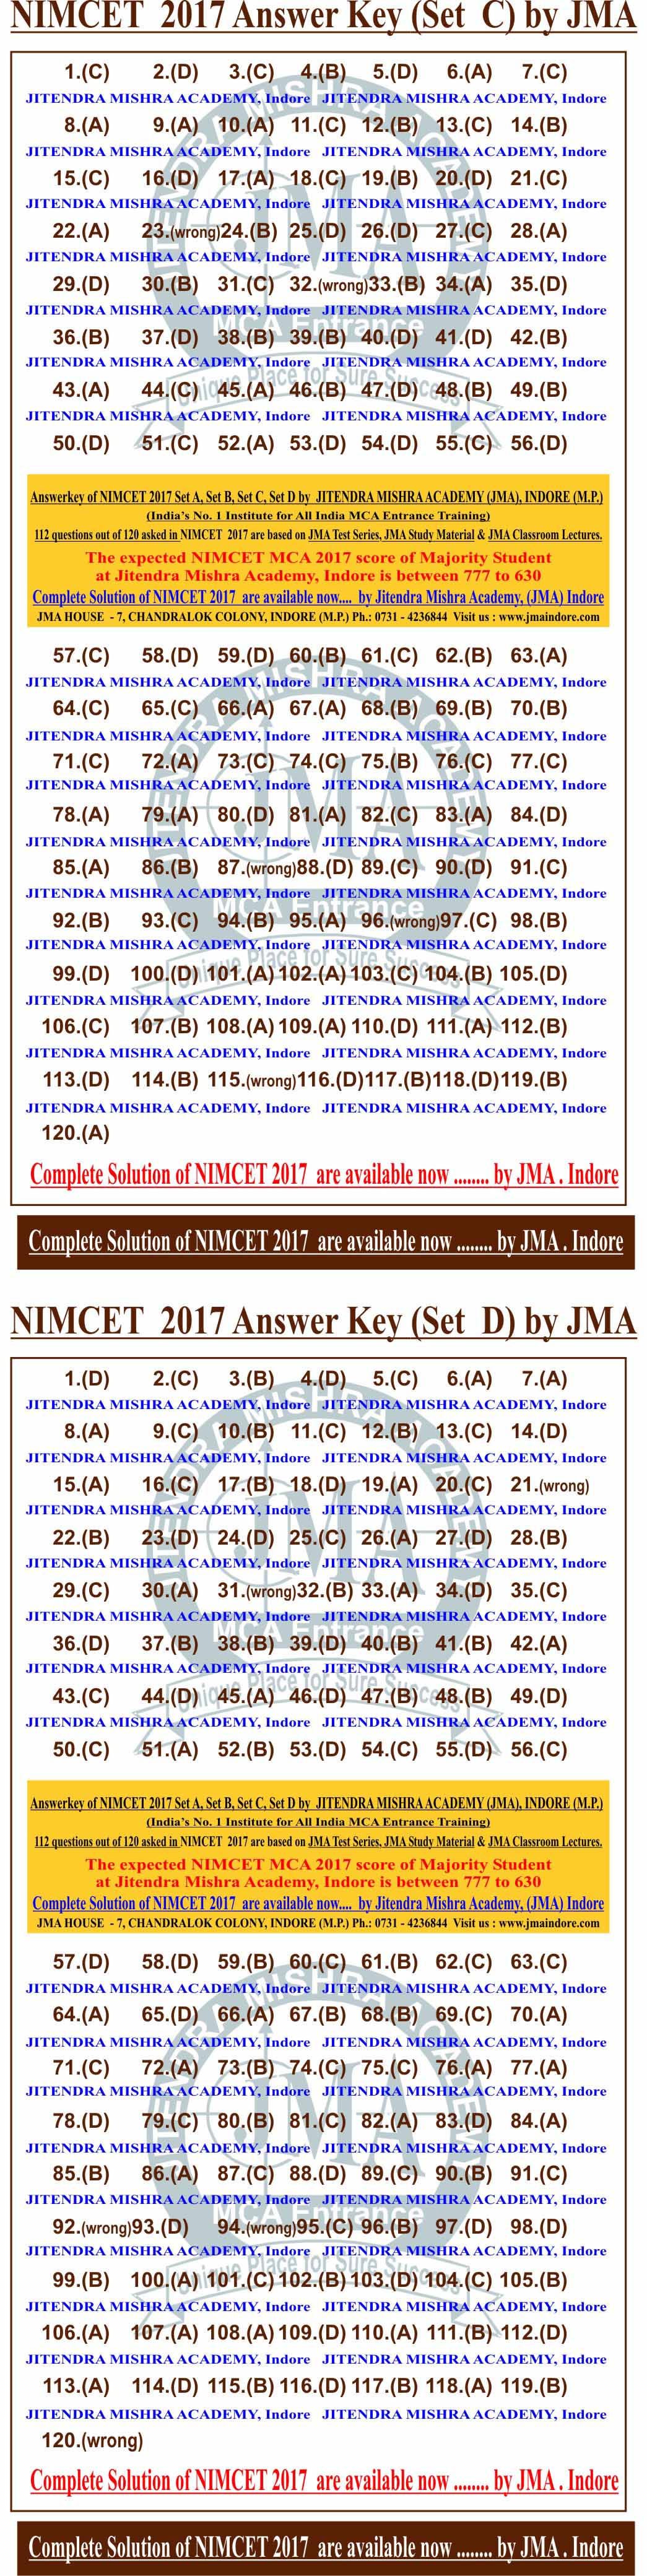 NIMCET - 2017 answerkey (3)